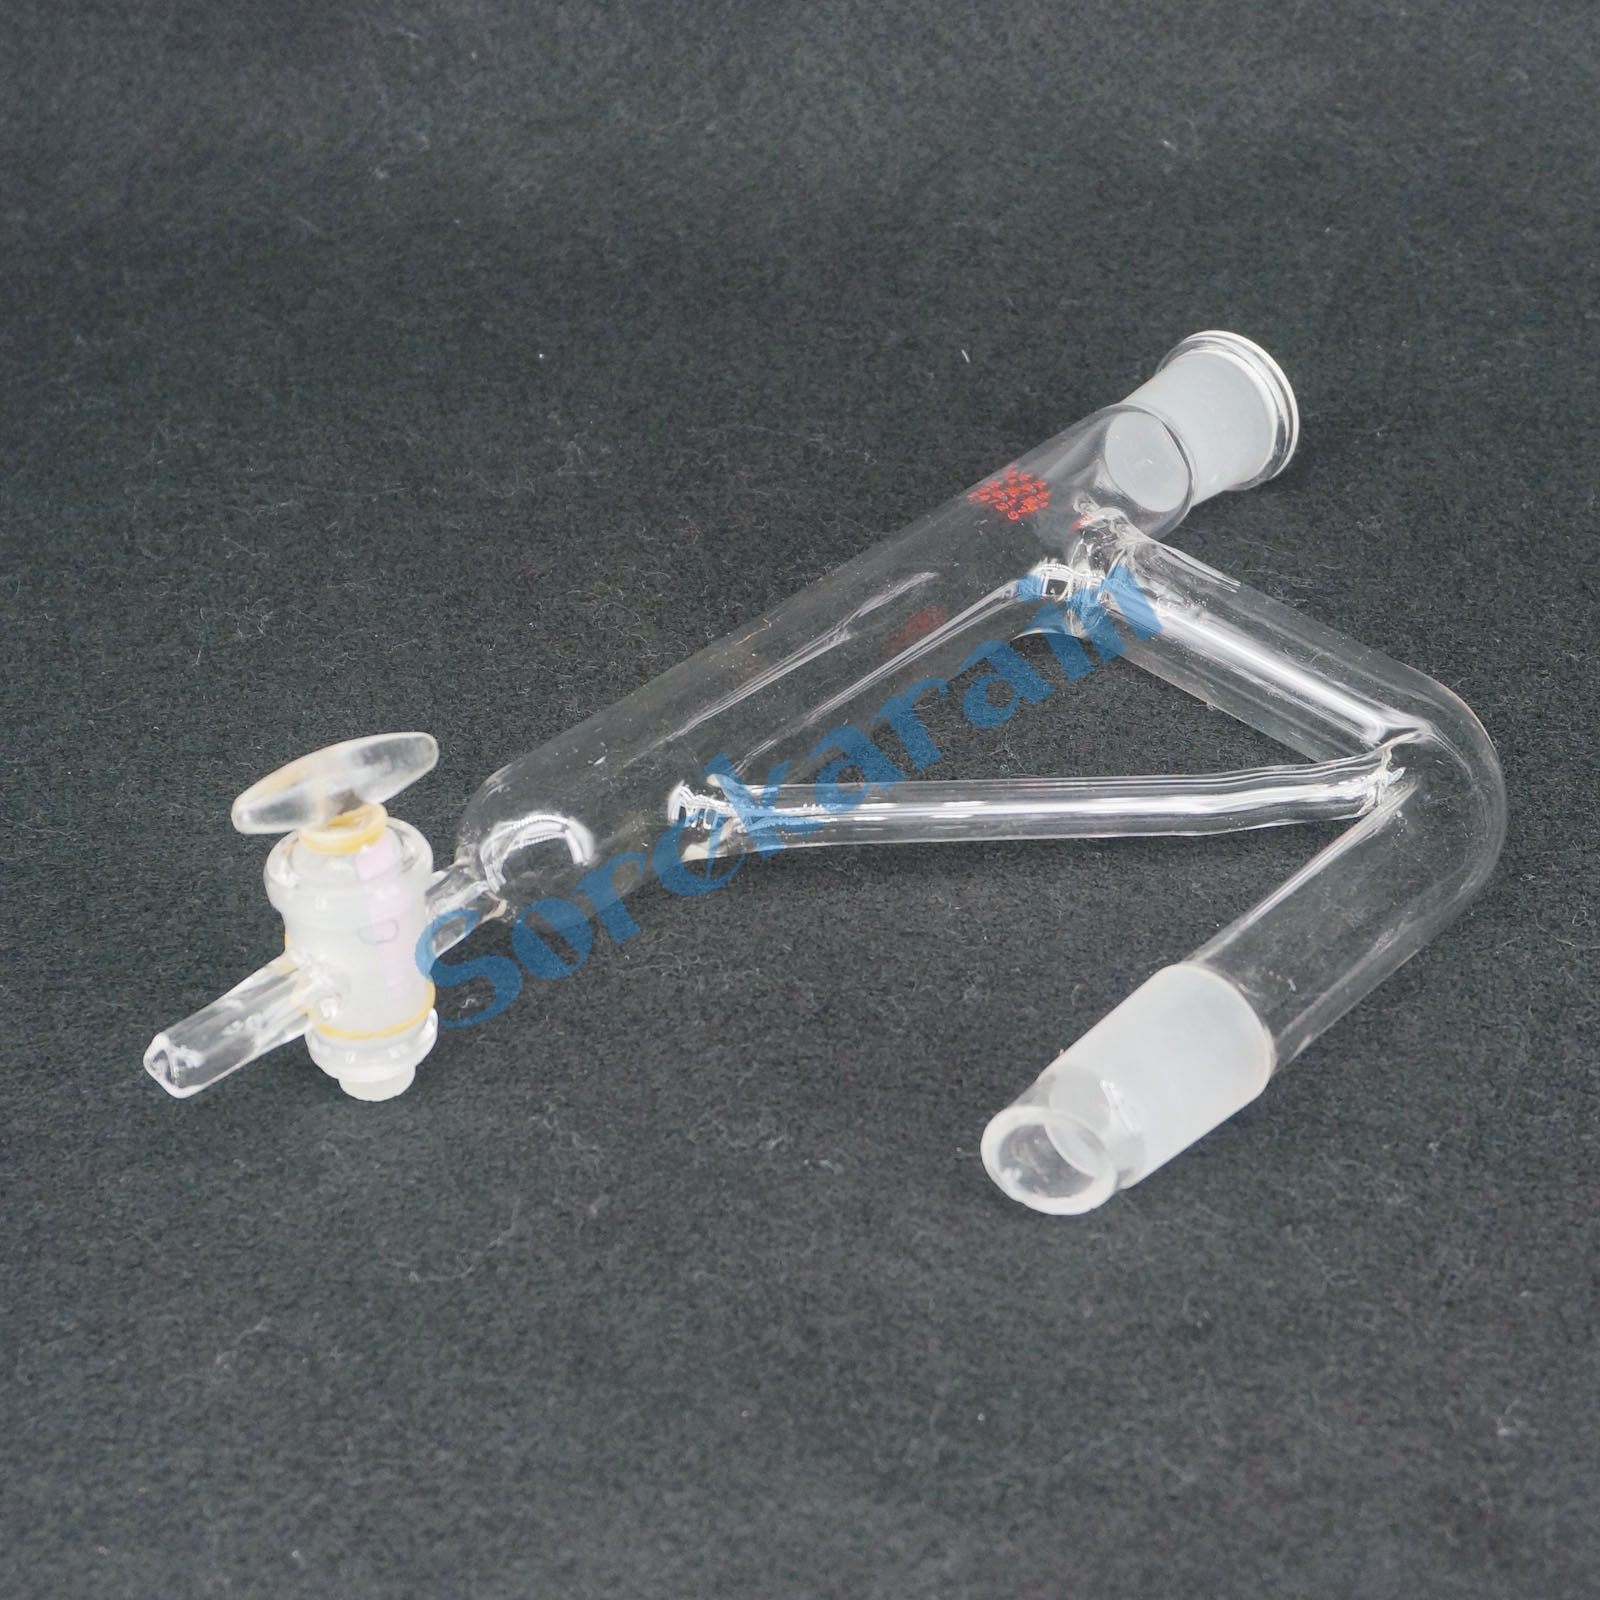 19-26mm 24-29mm 29-32mm fælles laboratorieolie vand refulx dekanter separator glas prop destillation